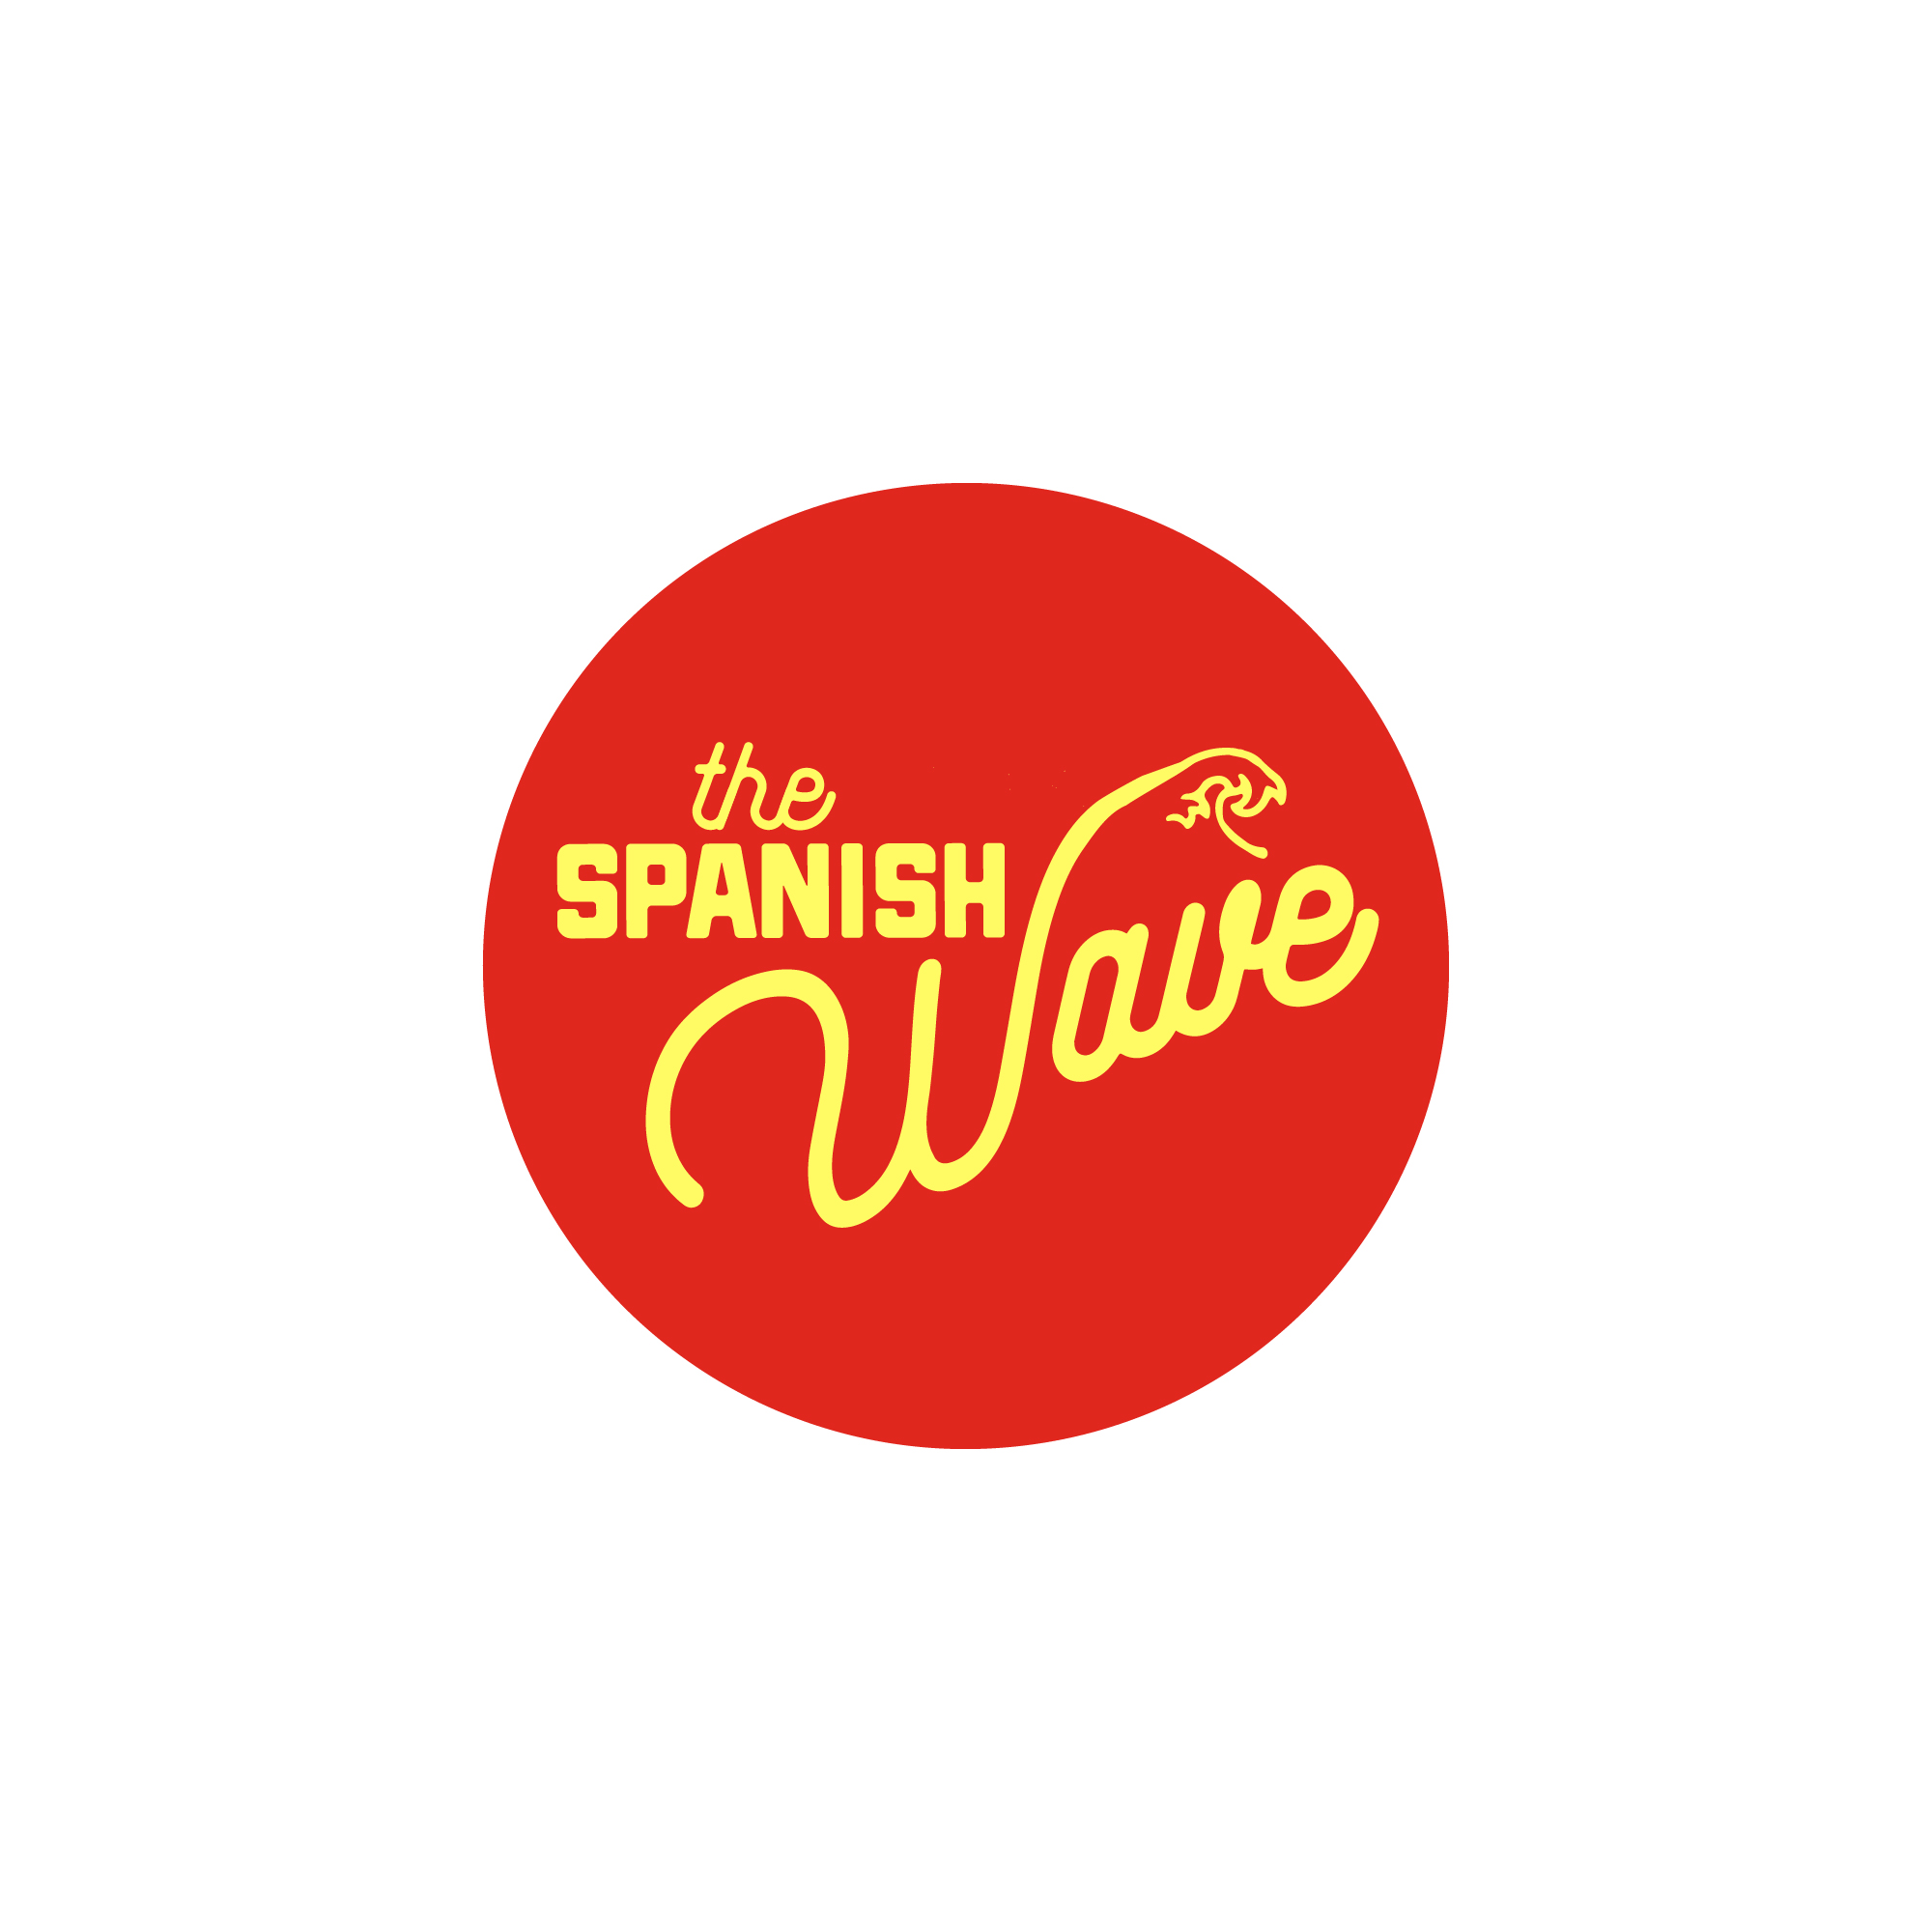 THE SPANISH WAVE